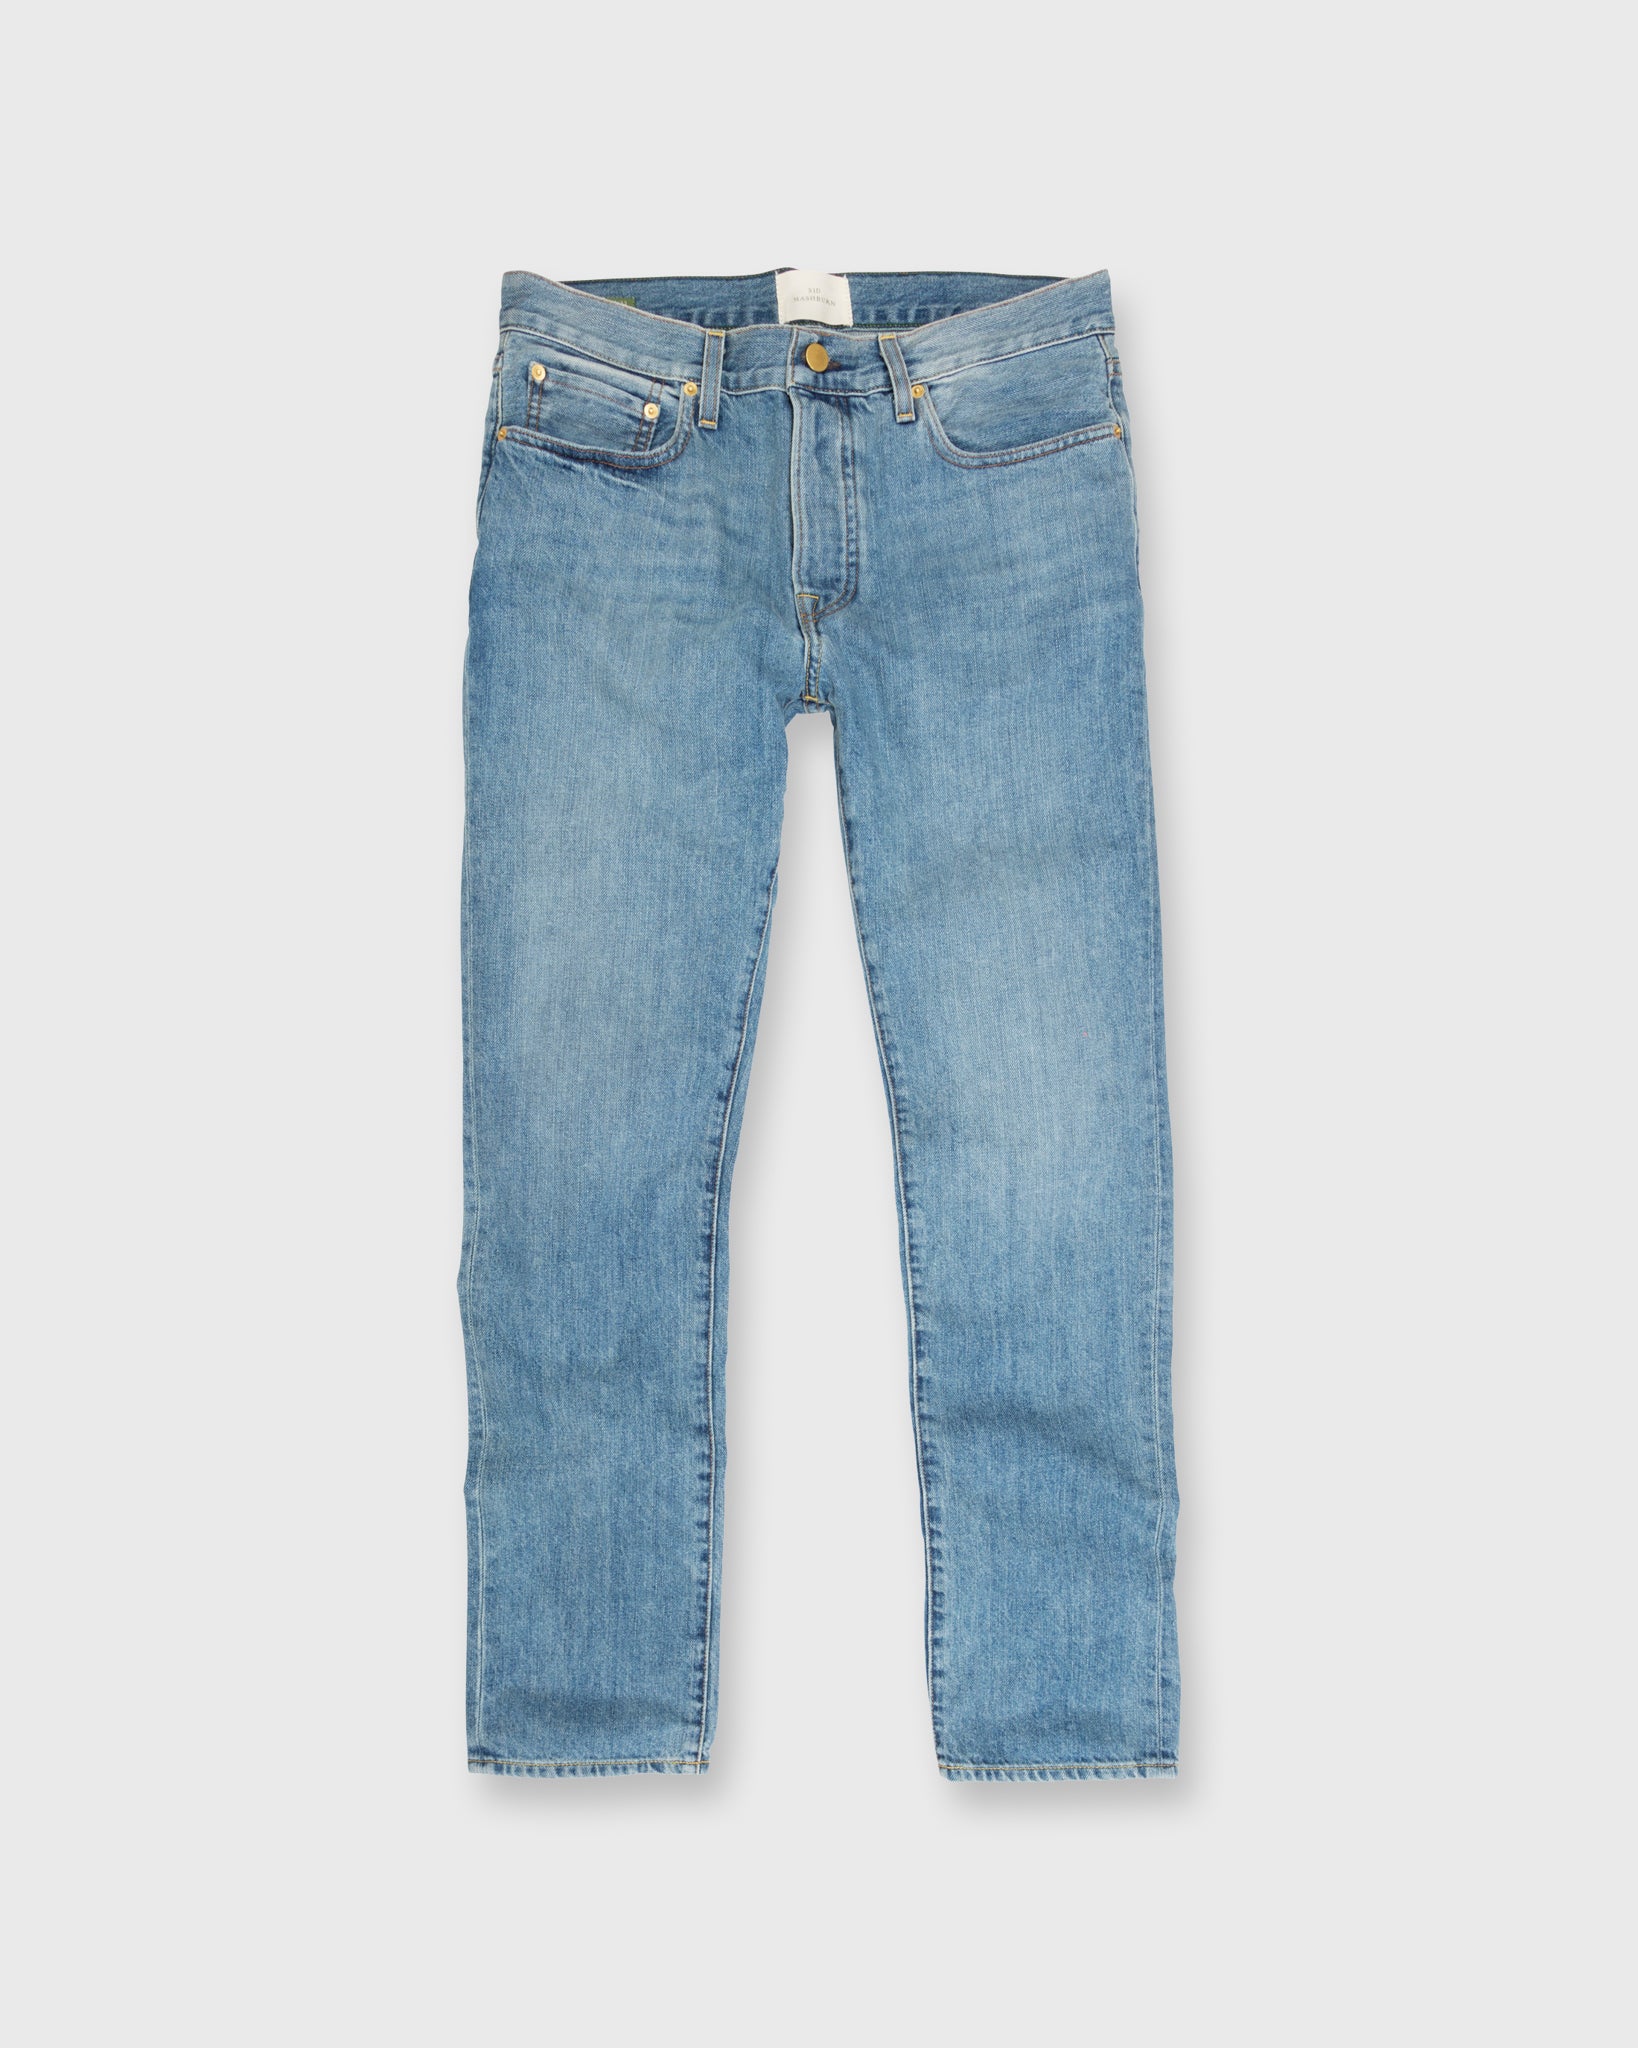 Smoky Grey Skinny Ankle Fit Men's Denim Jeans - Tistabene - Tistabene